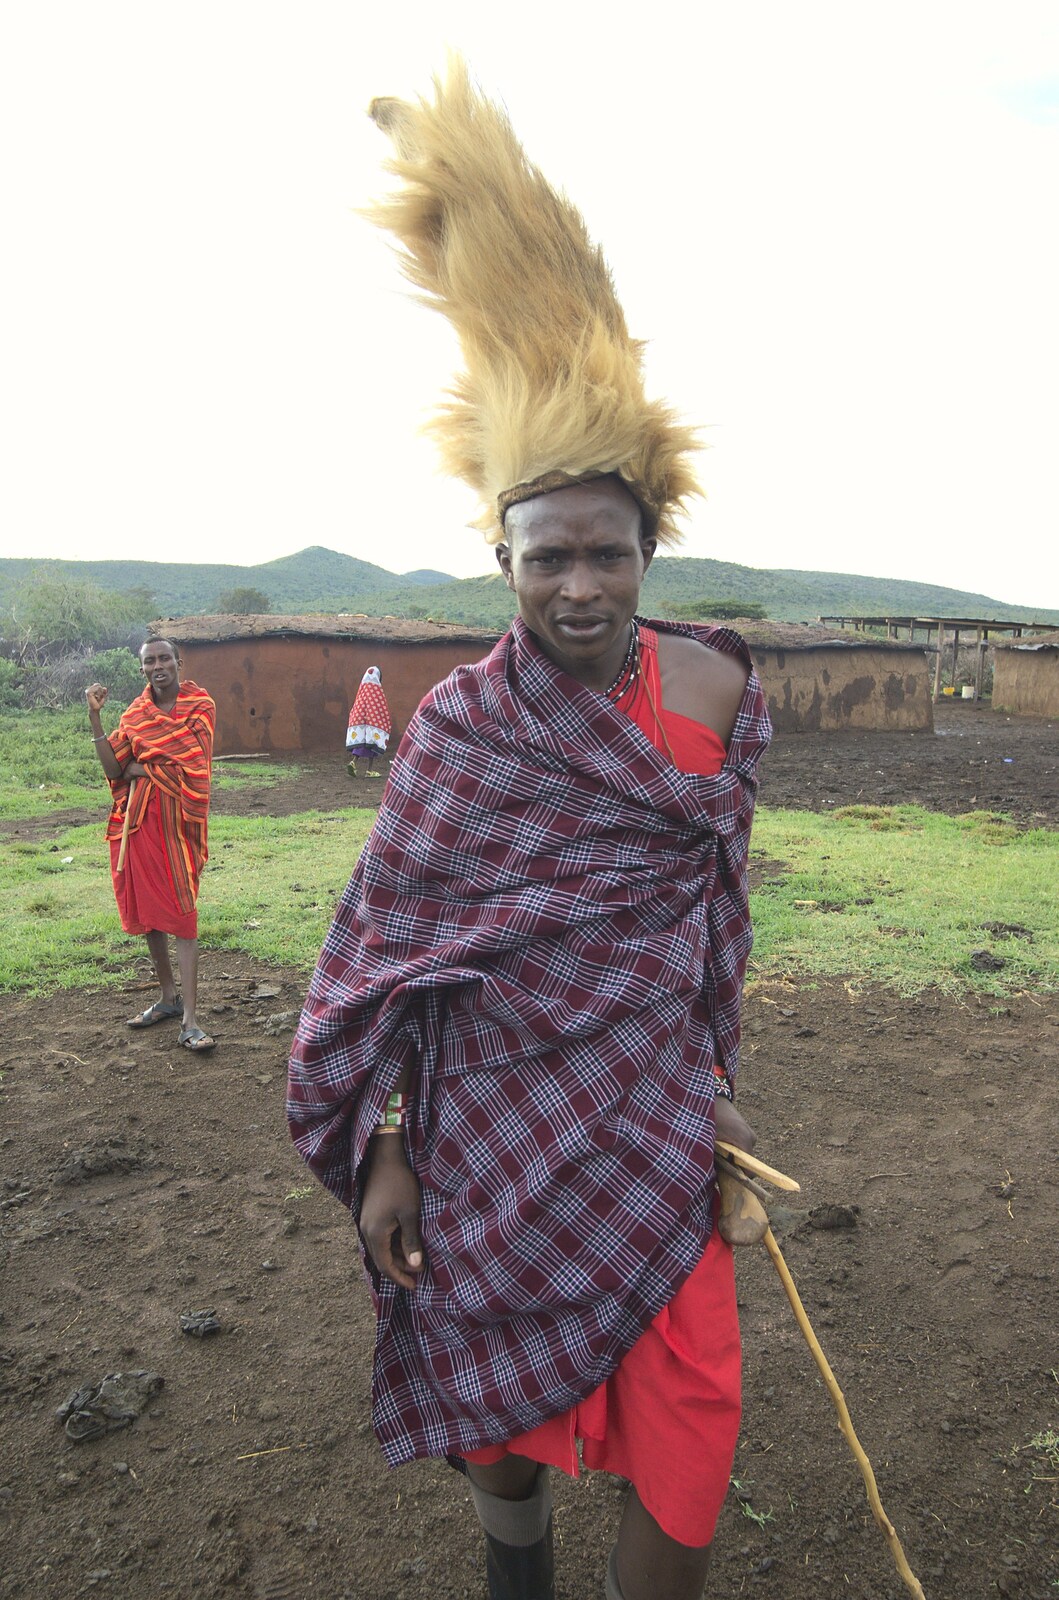 Maasai Mara Safari and a Maasai Village, Ololaimutia, Kenya - 5th November 2010: A lion-skin head-dress is part of the ritual